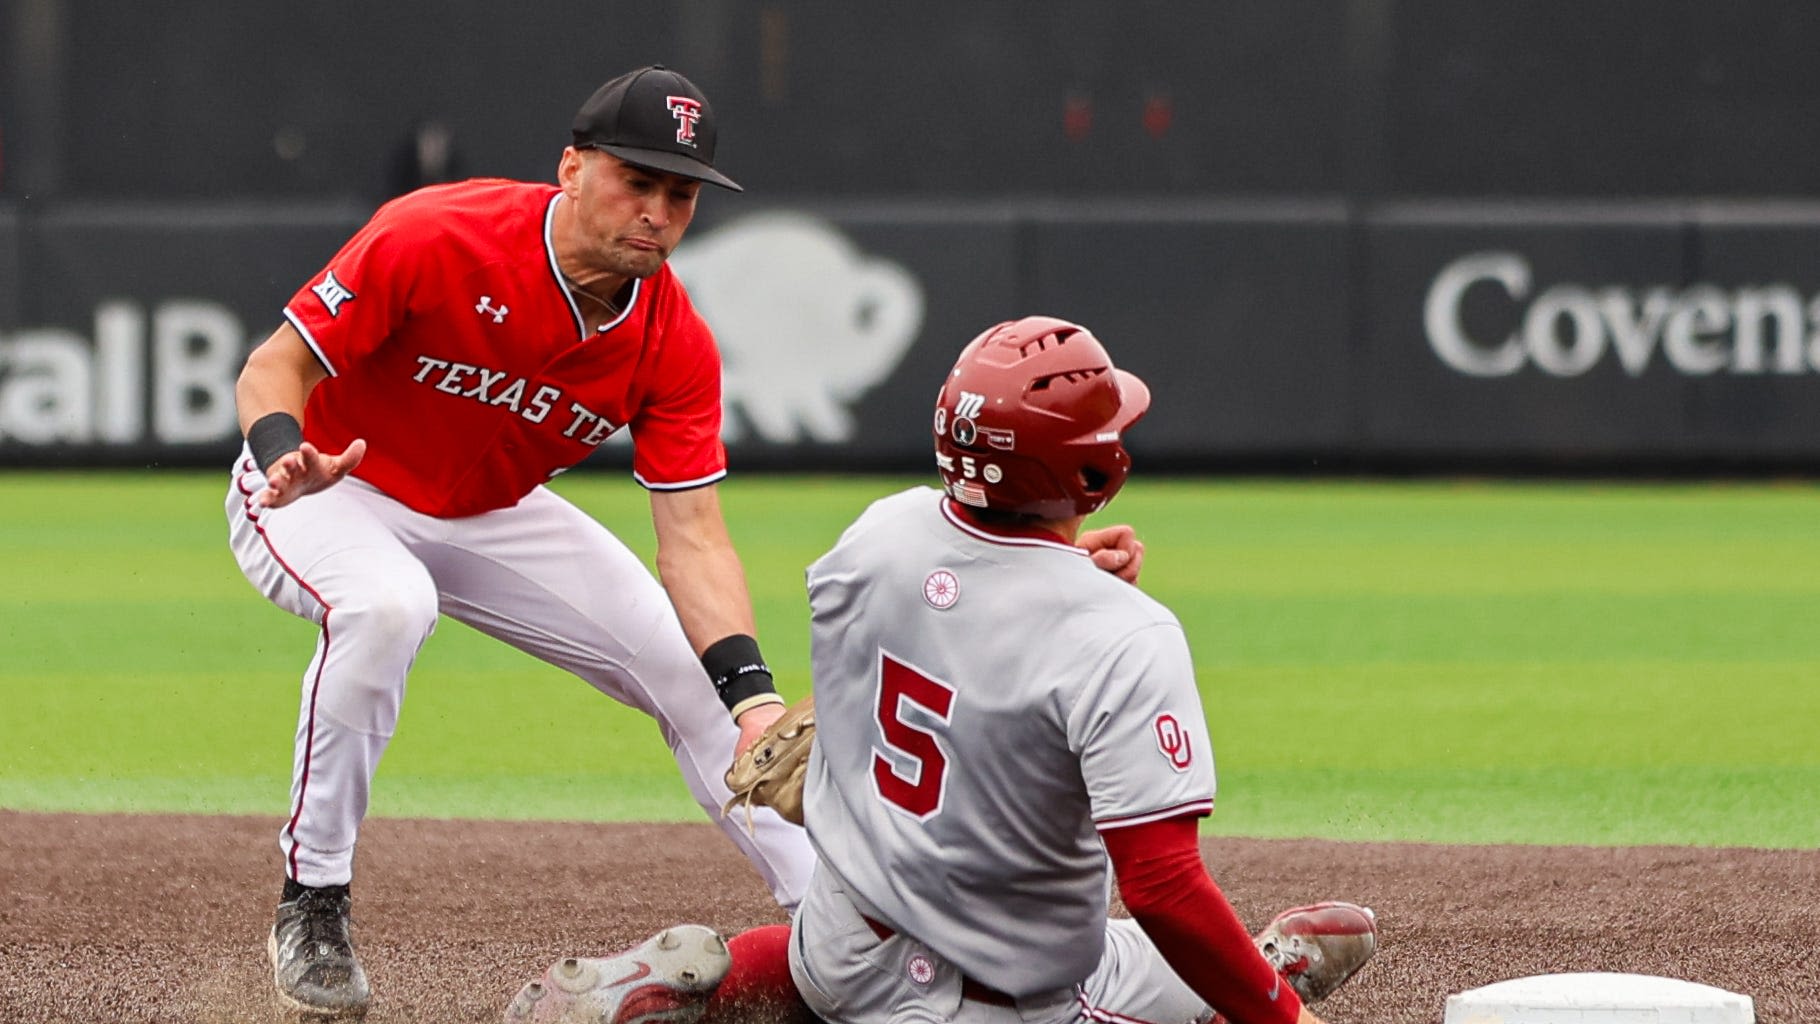 Texas Tech baseball vs. Oklahoma: See photos from the Big 12 series